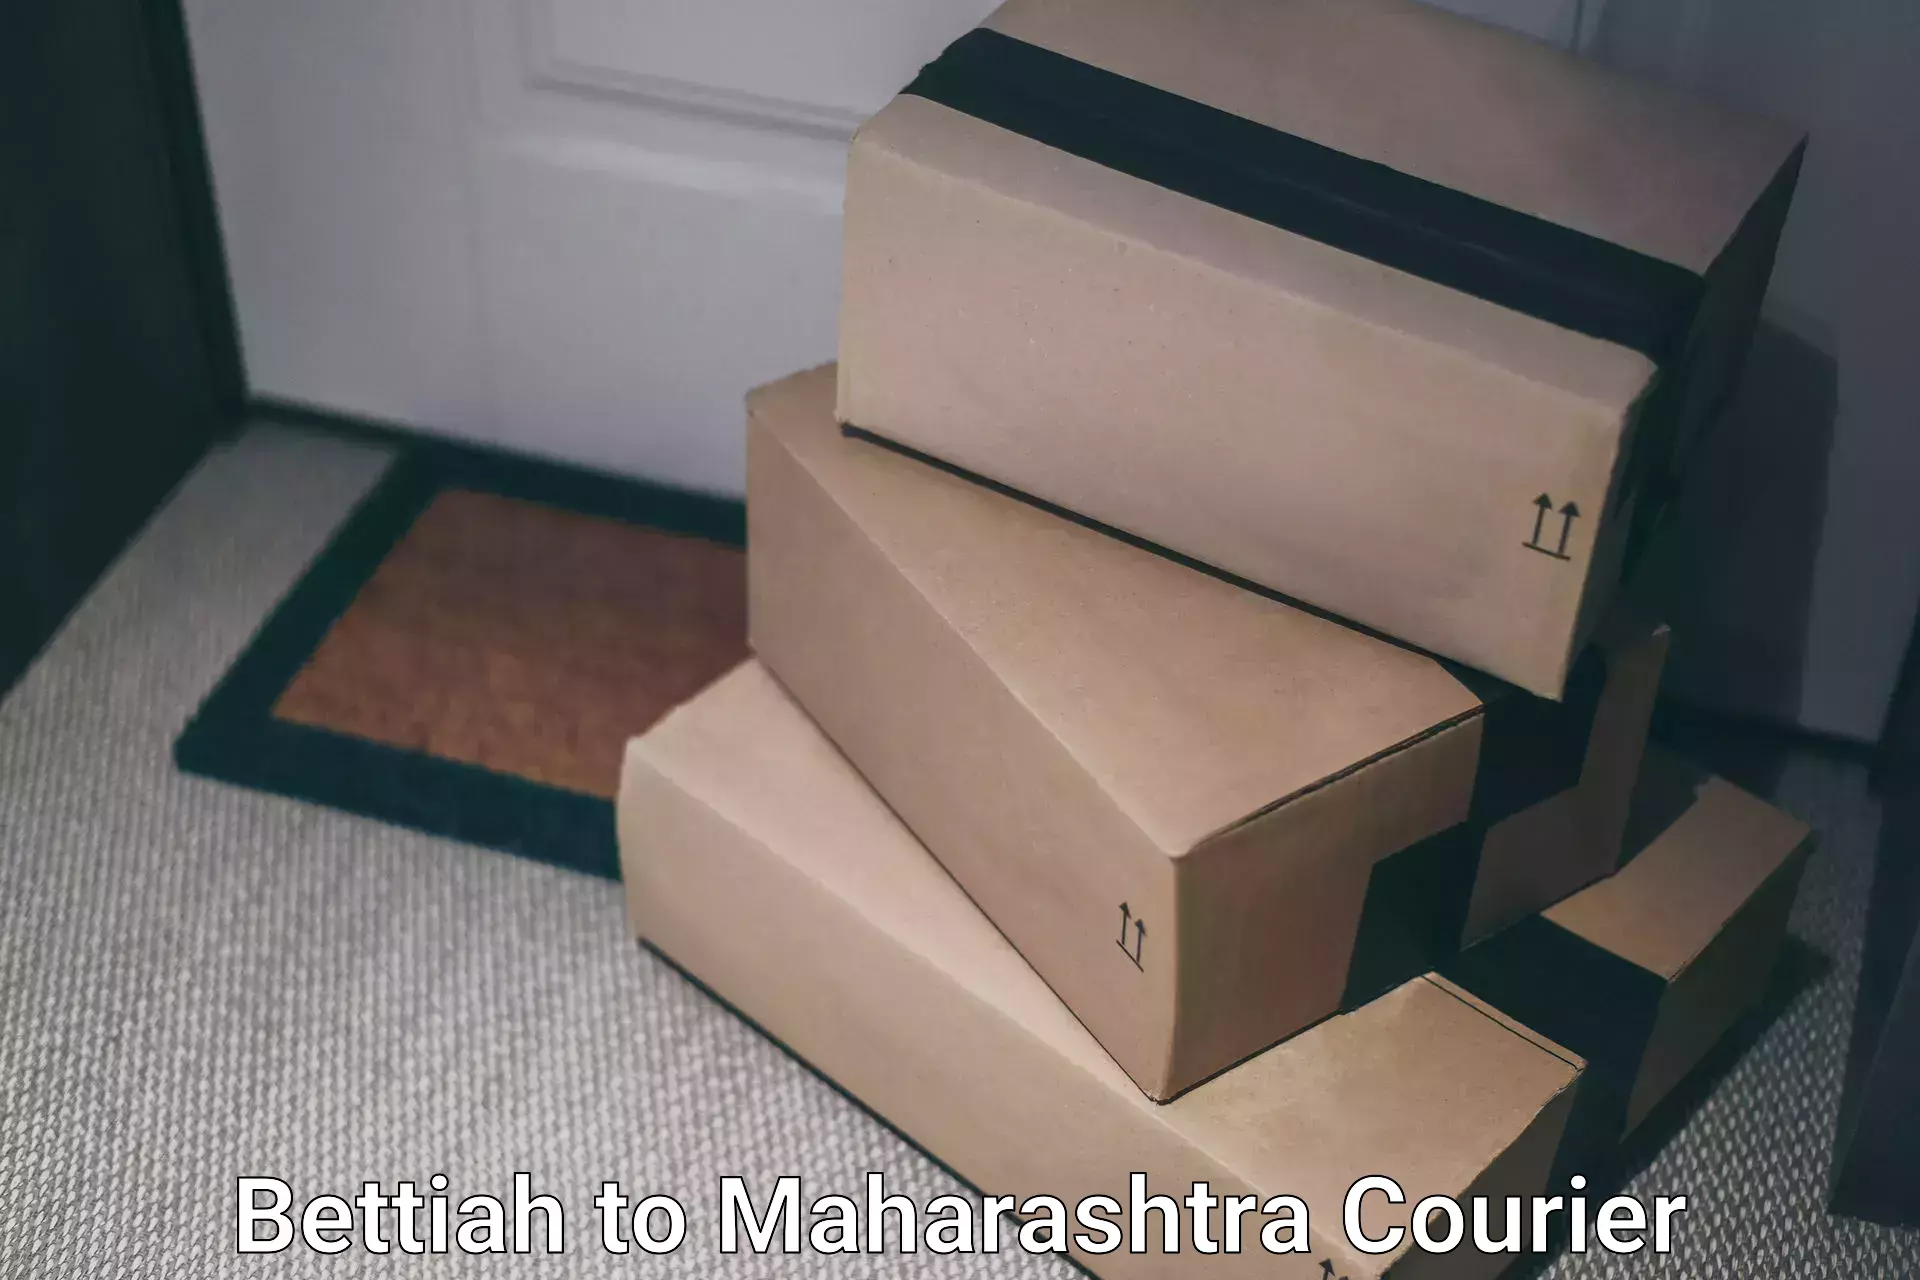 Full-service courier options Bettiah to Dadar